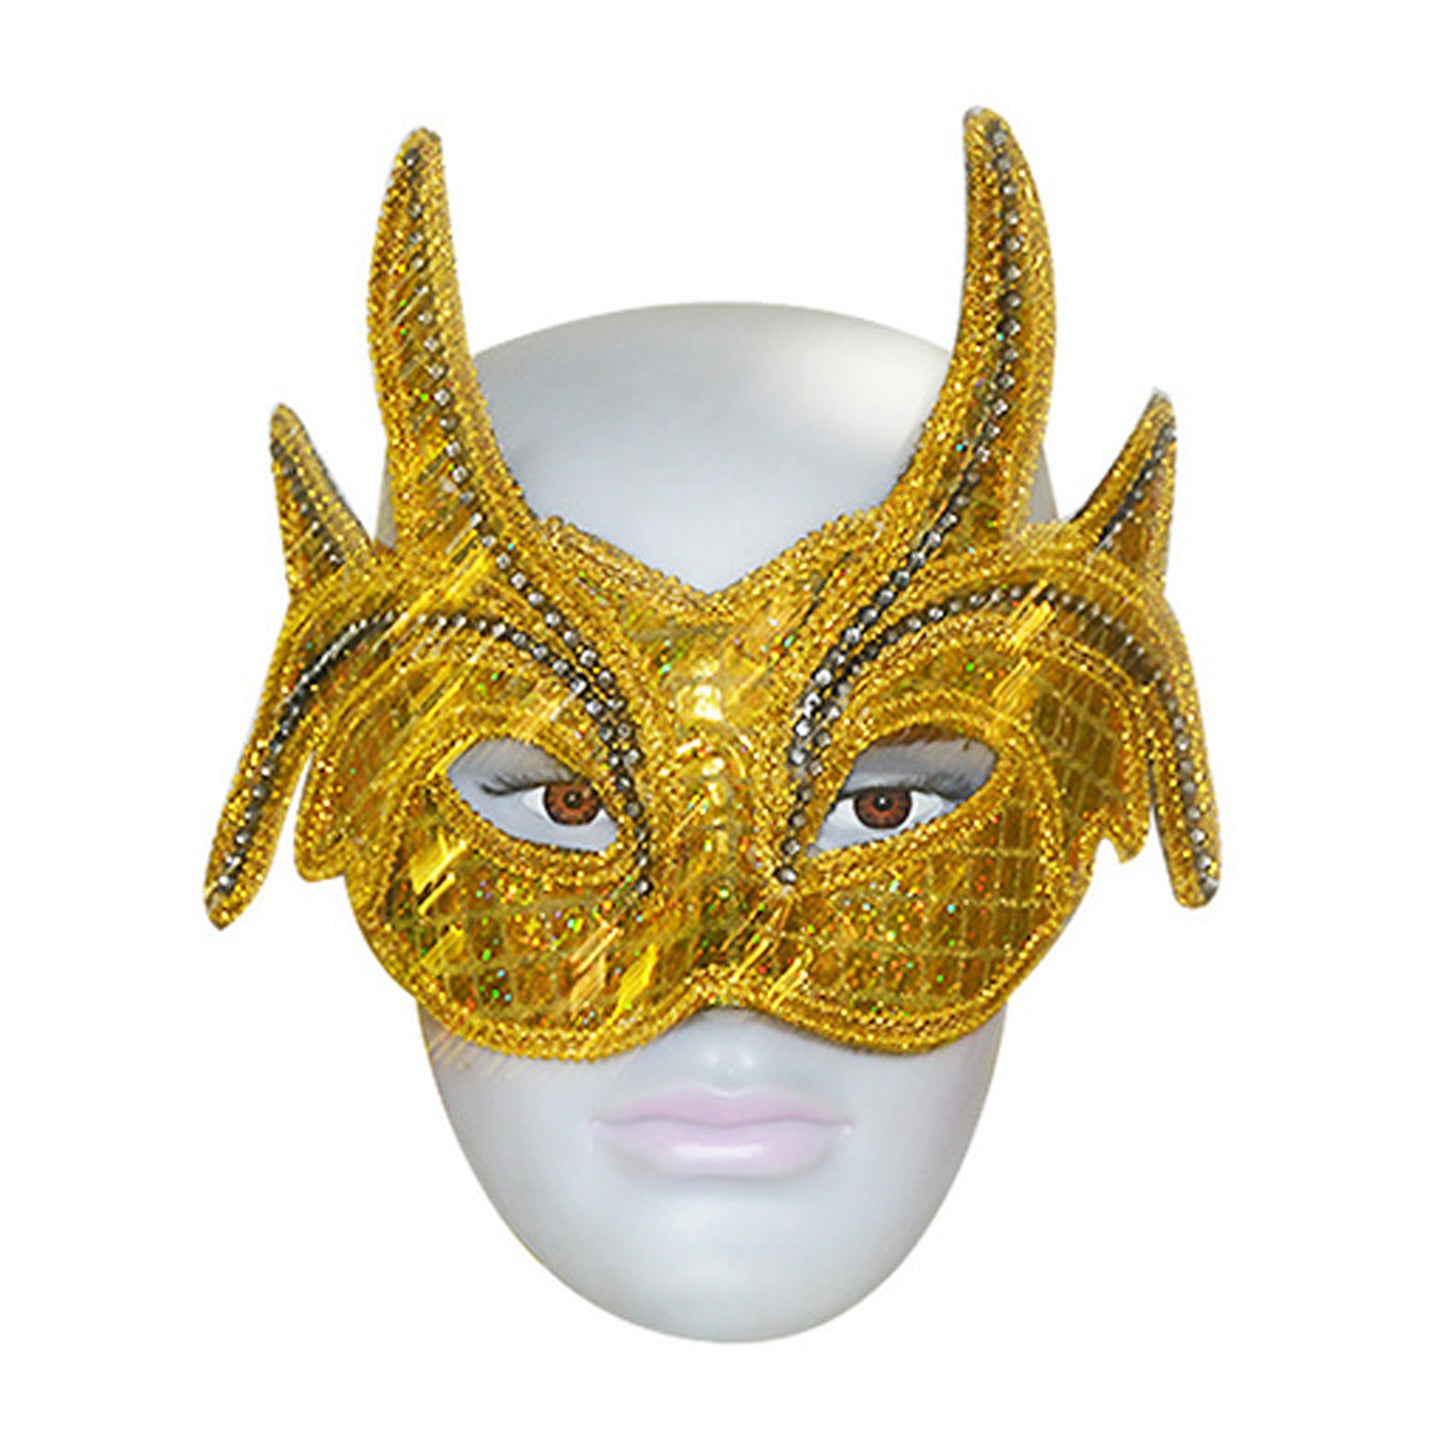 Fiery Masquerade Mask